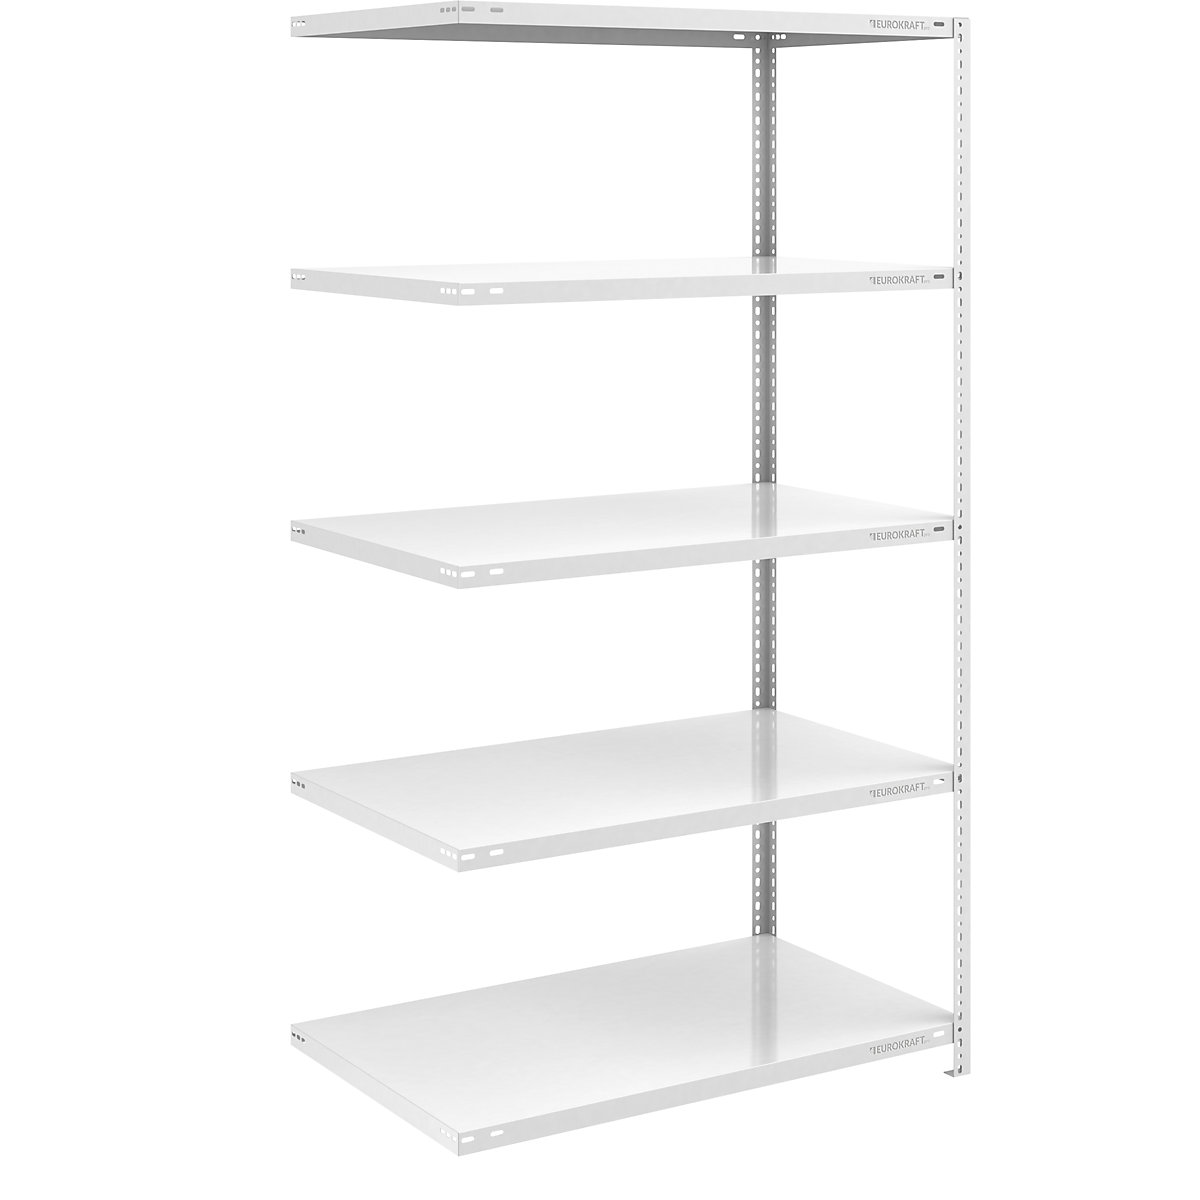 Bolt-together shelf unit, light duty, plastic coated – eurokraft pro, shelf unit height 2000 mm, shelf width 1000 mm, depth 800 mm, extension shelf unit-6